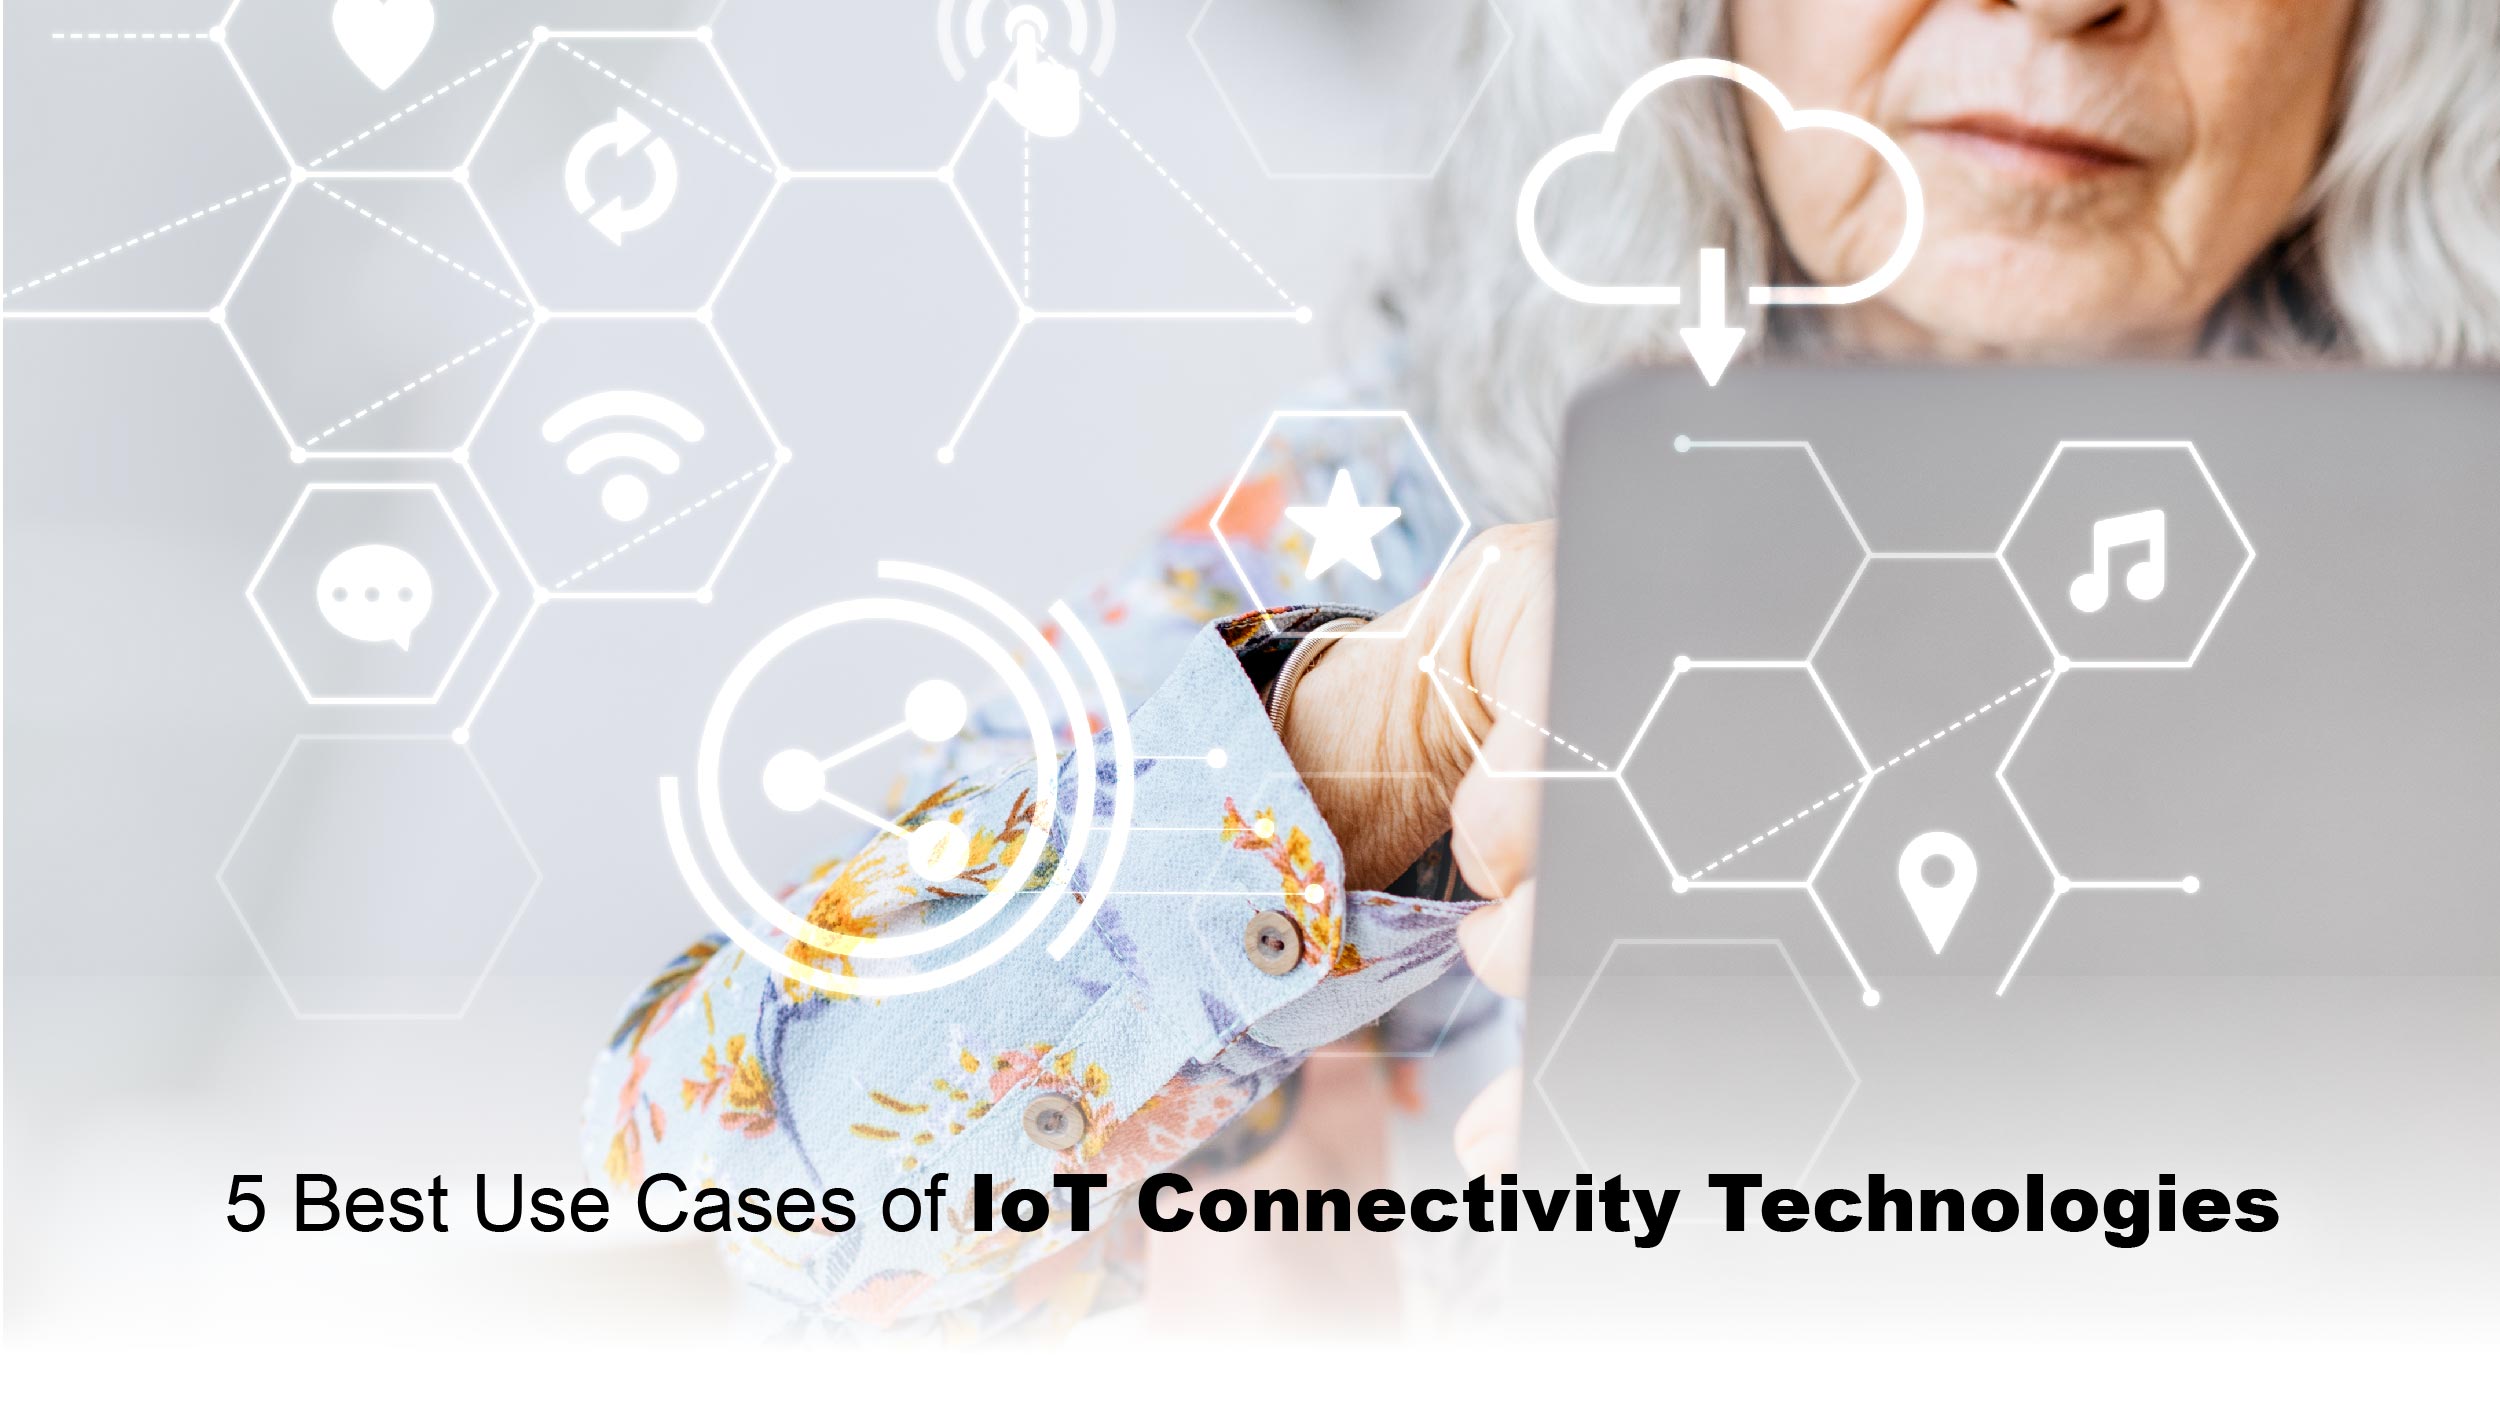 IoT connectivity technologies